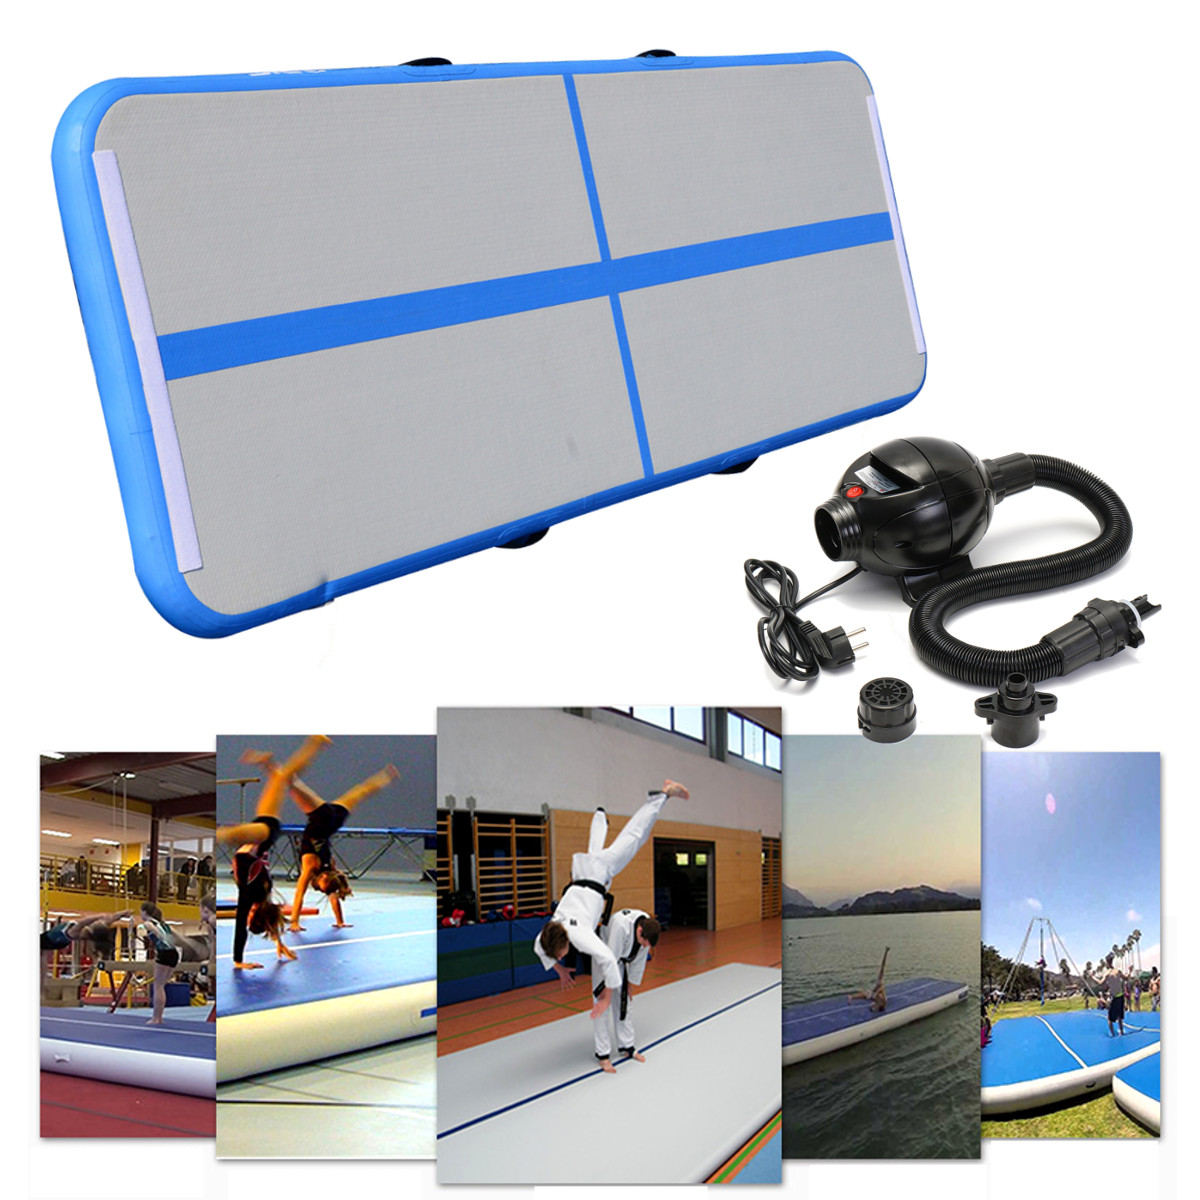 

300x90x10cm Airtrack Gymnastics Mat Floor Home Gymnastics Tumbling Mat Inflatable Tumbling Air Track GYM With 220V Pump